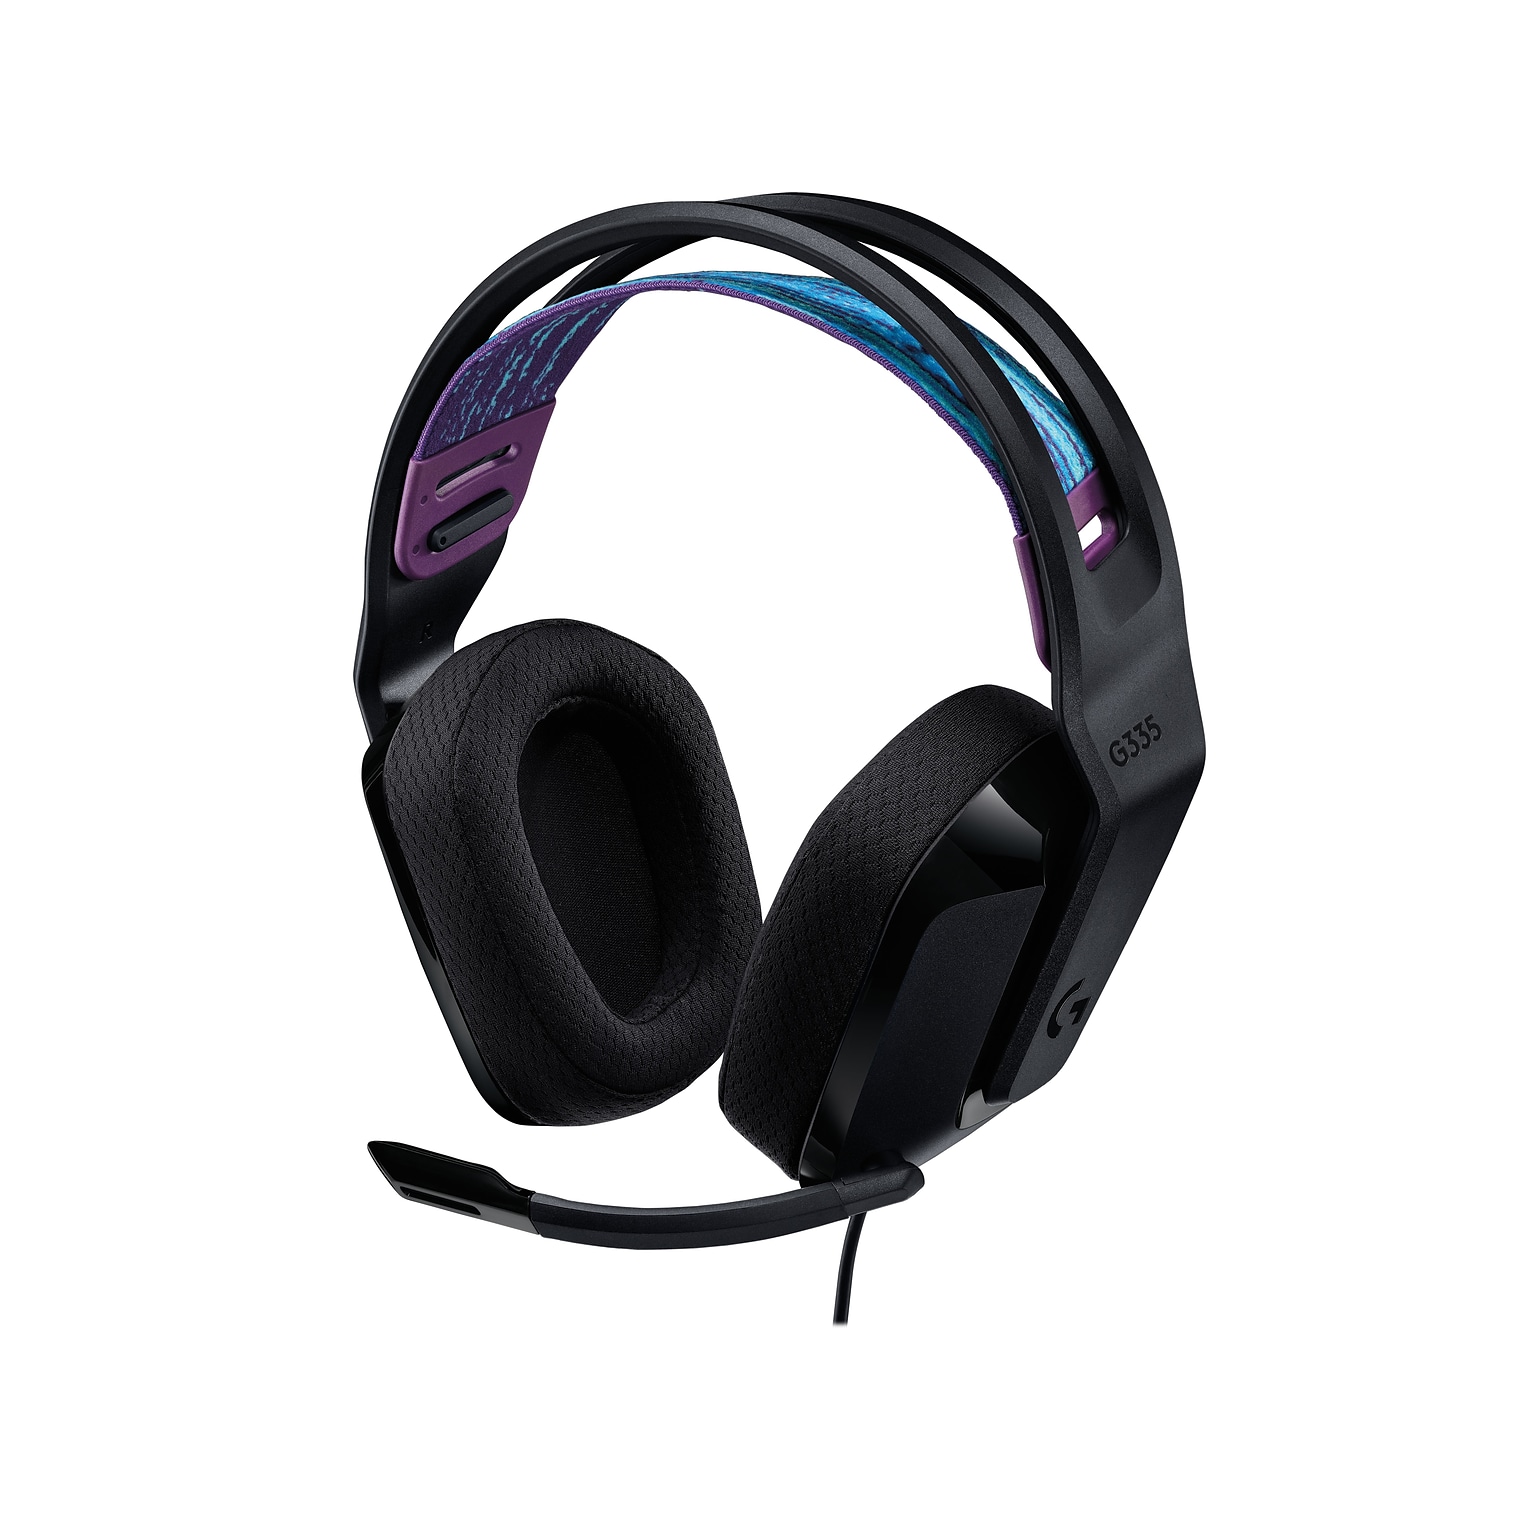 Logitech G335 Stereo Headphones, Black/Blue/Purple (981-000977)